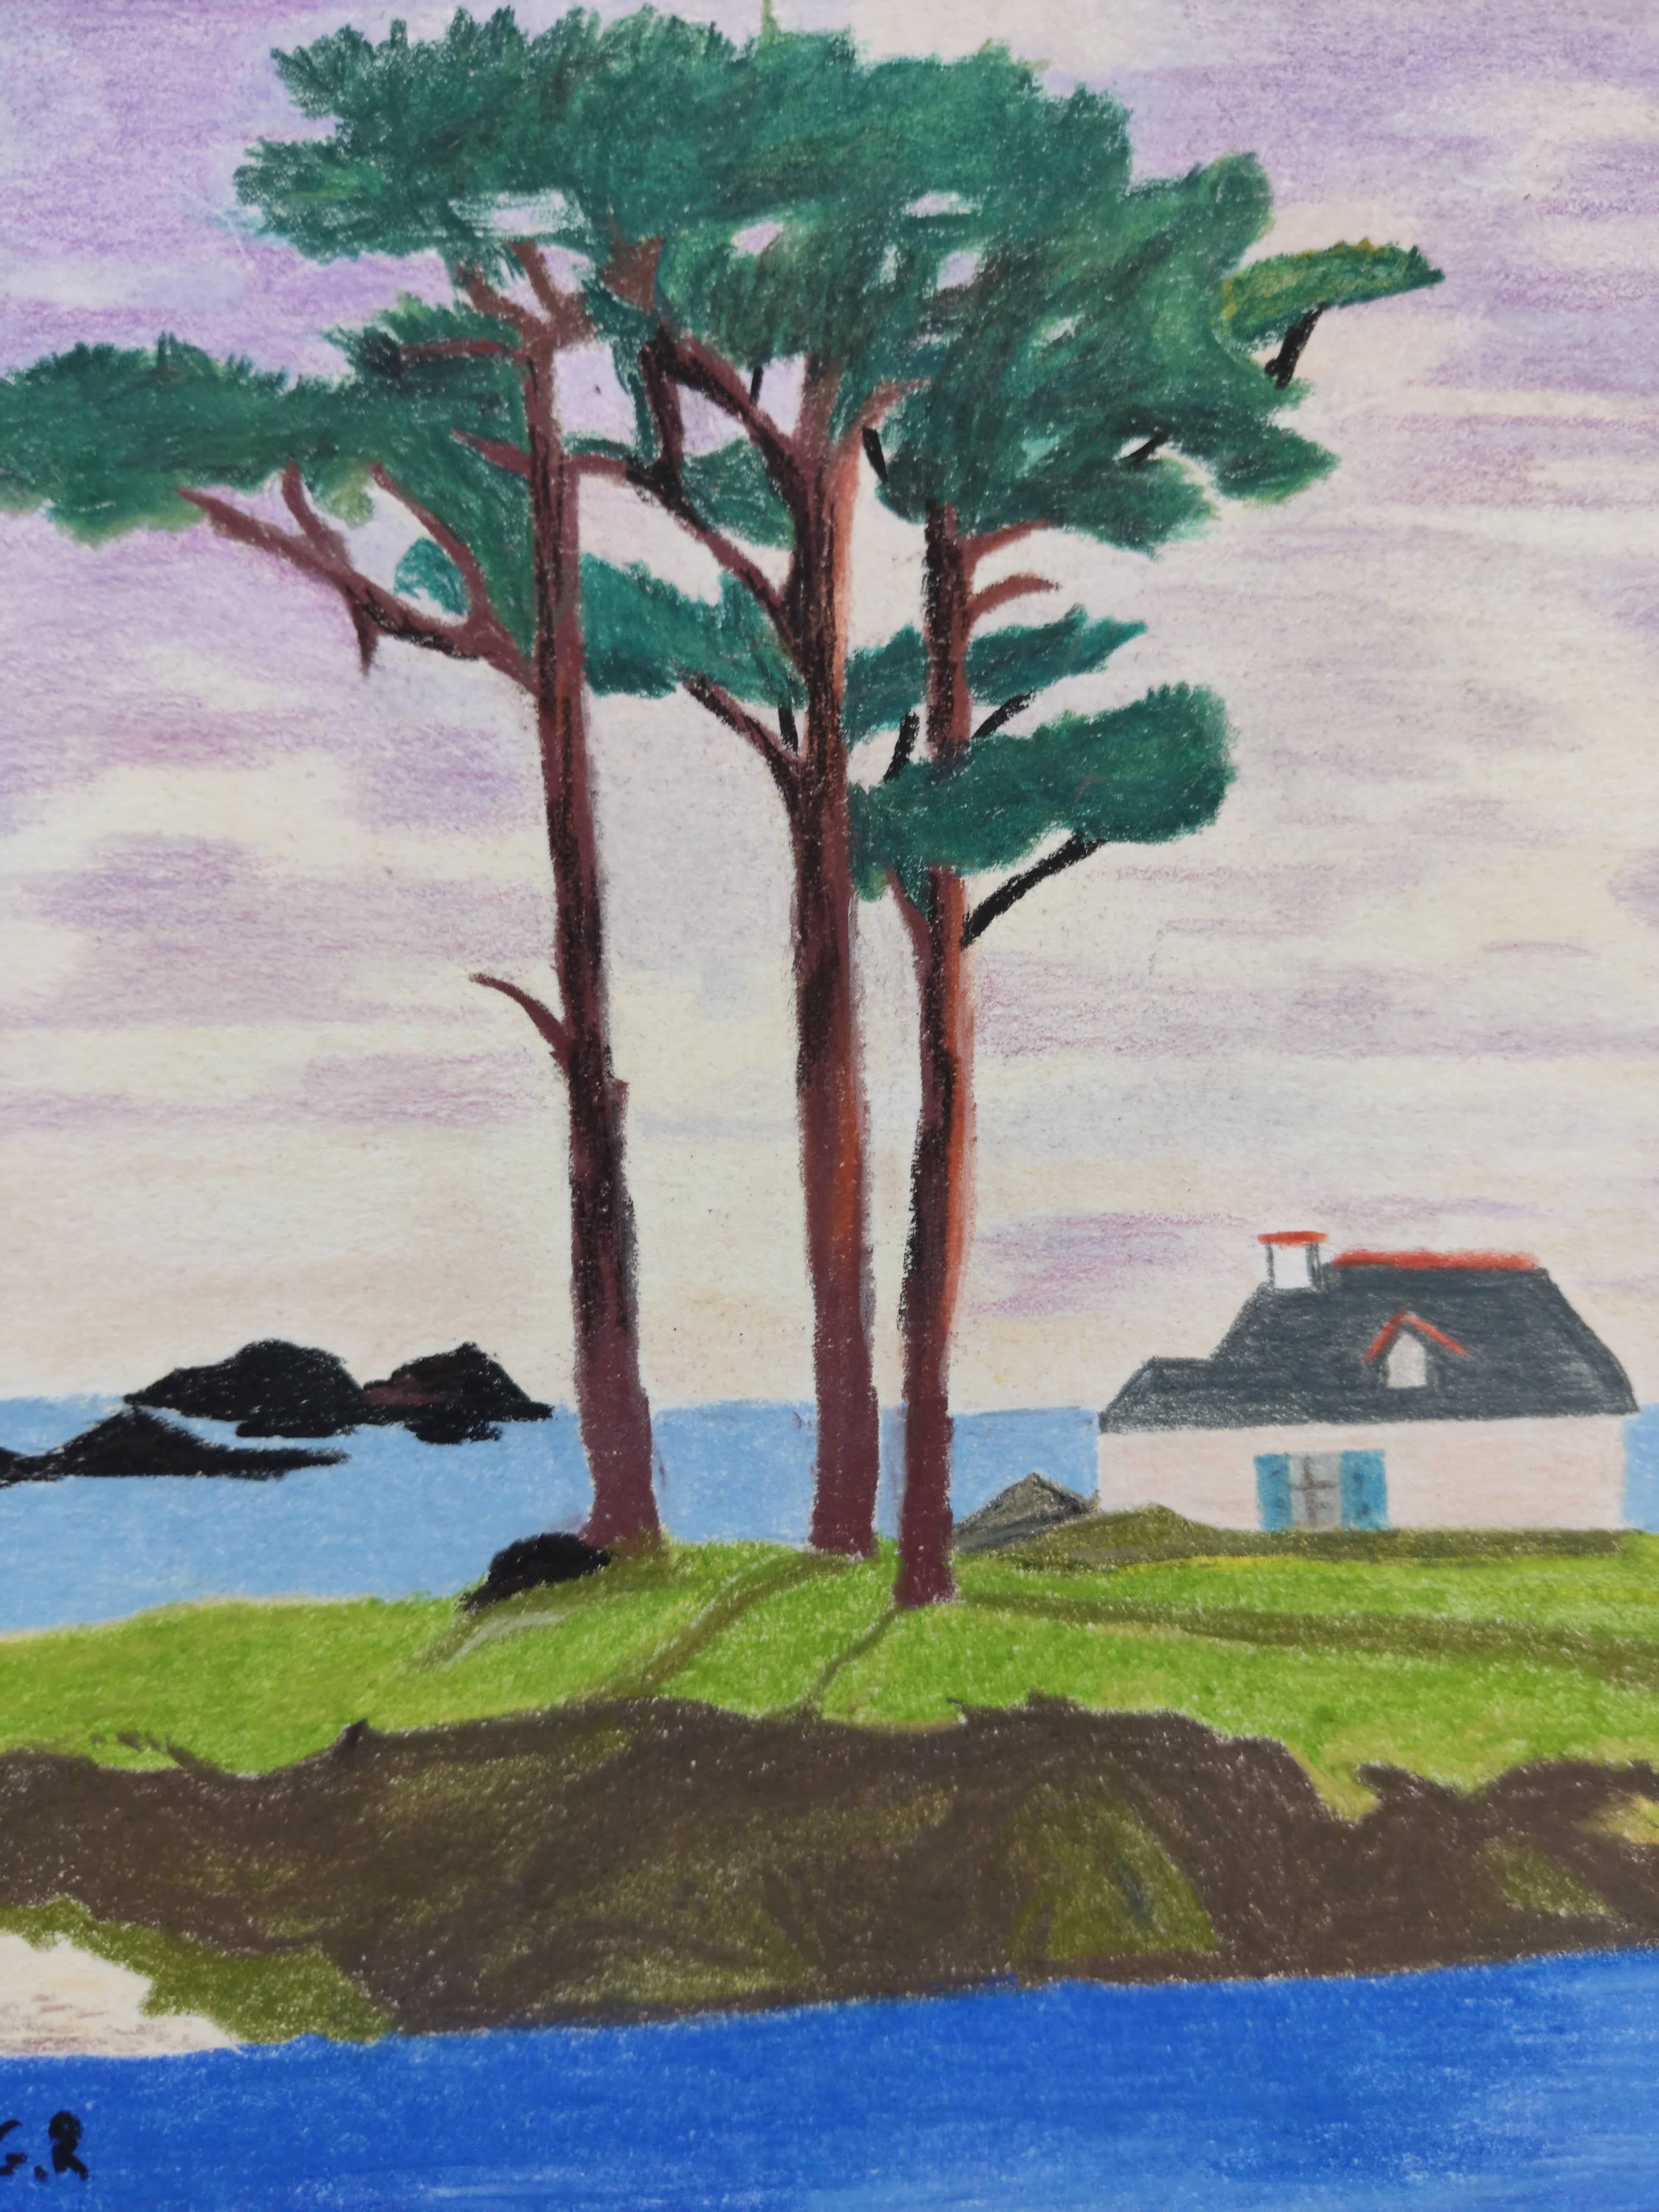 Au Bord de l'eau, Original Drawing, Pastel, Trees and House along the seafront - Impressionist Art by Gabriel Riesnert